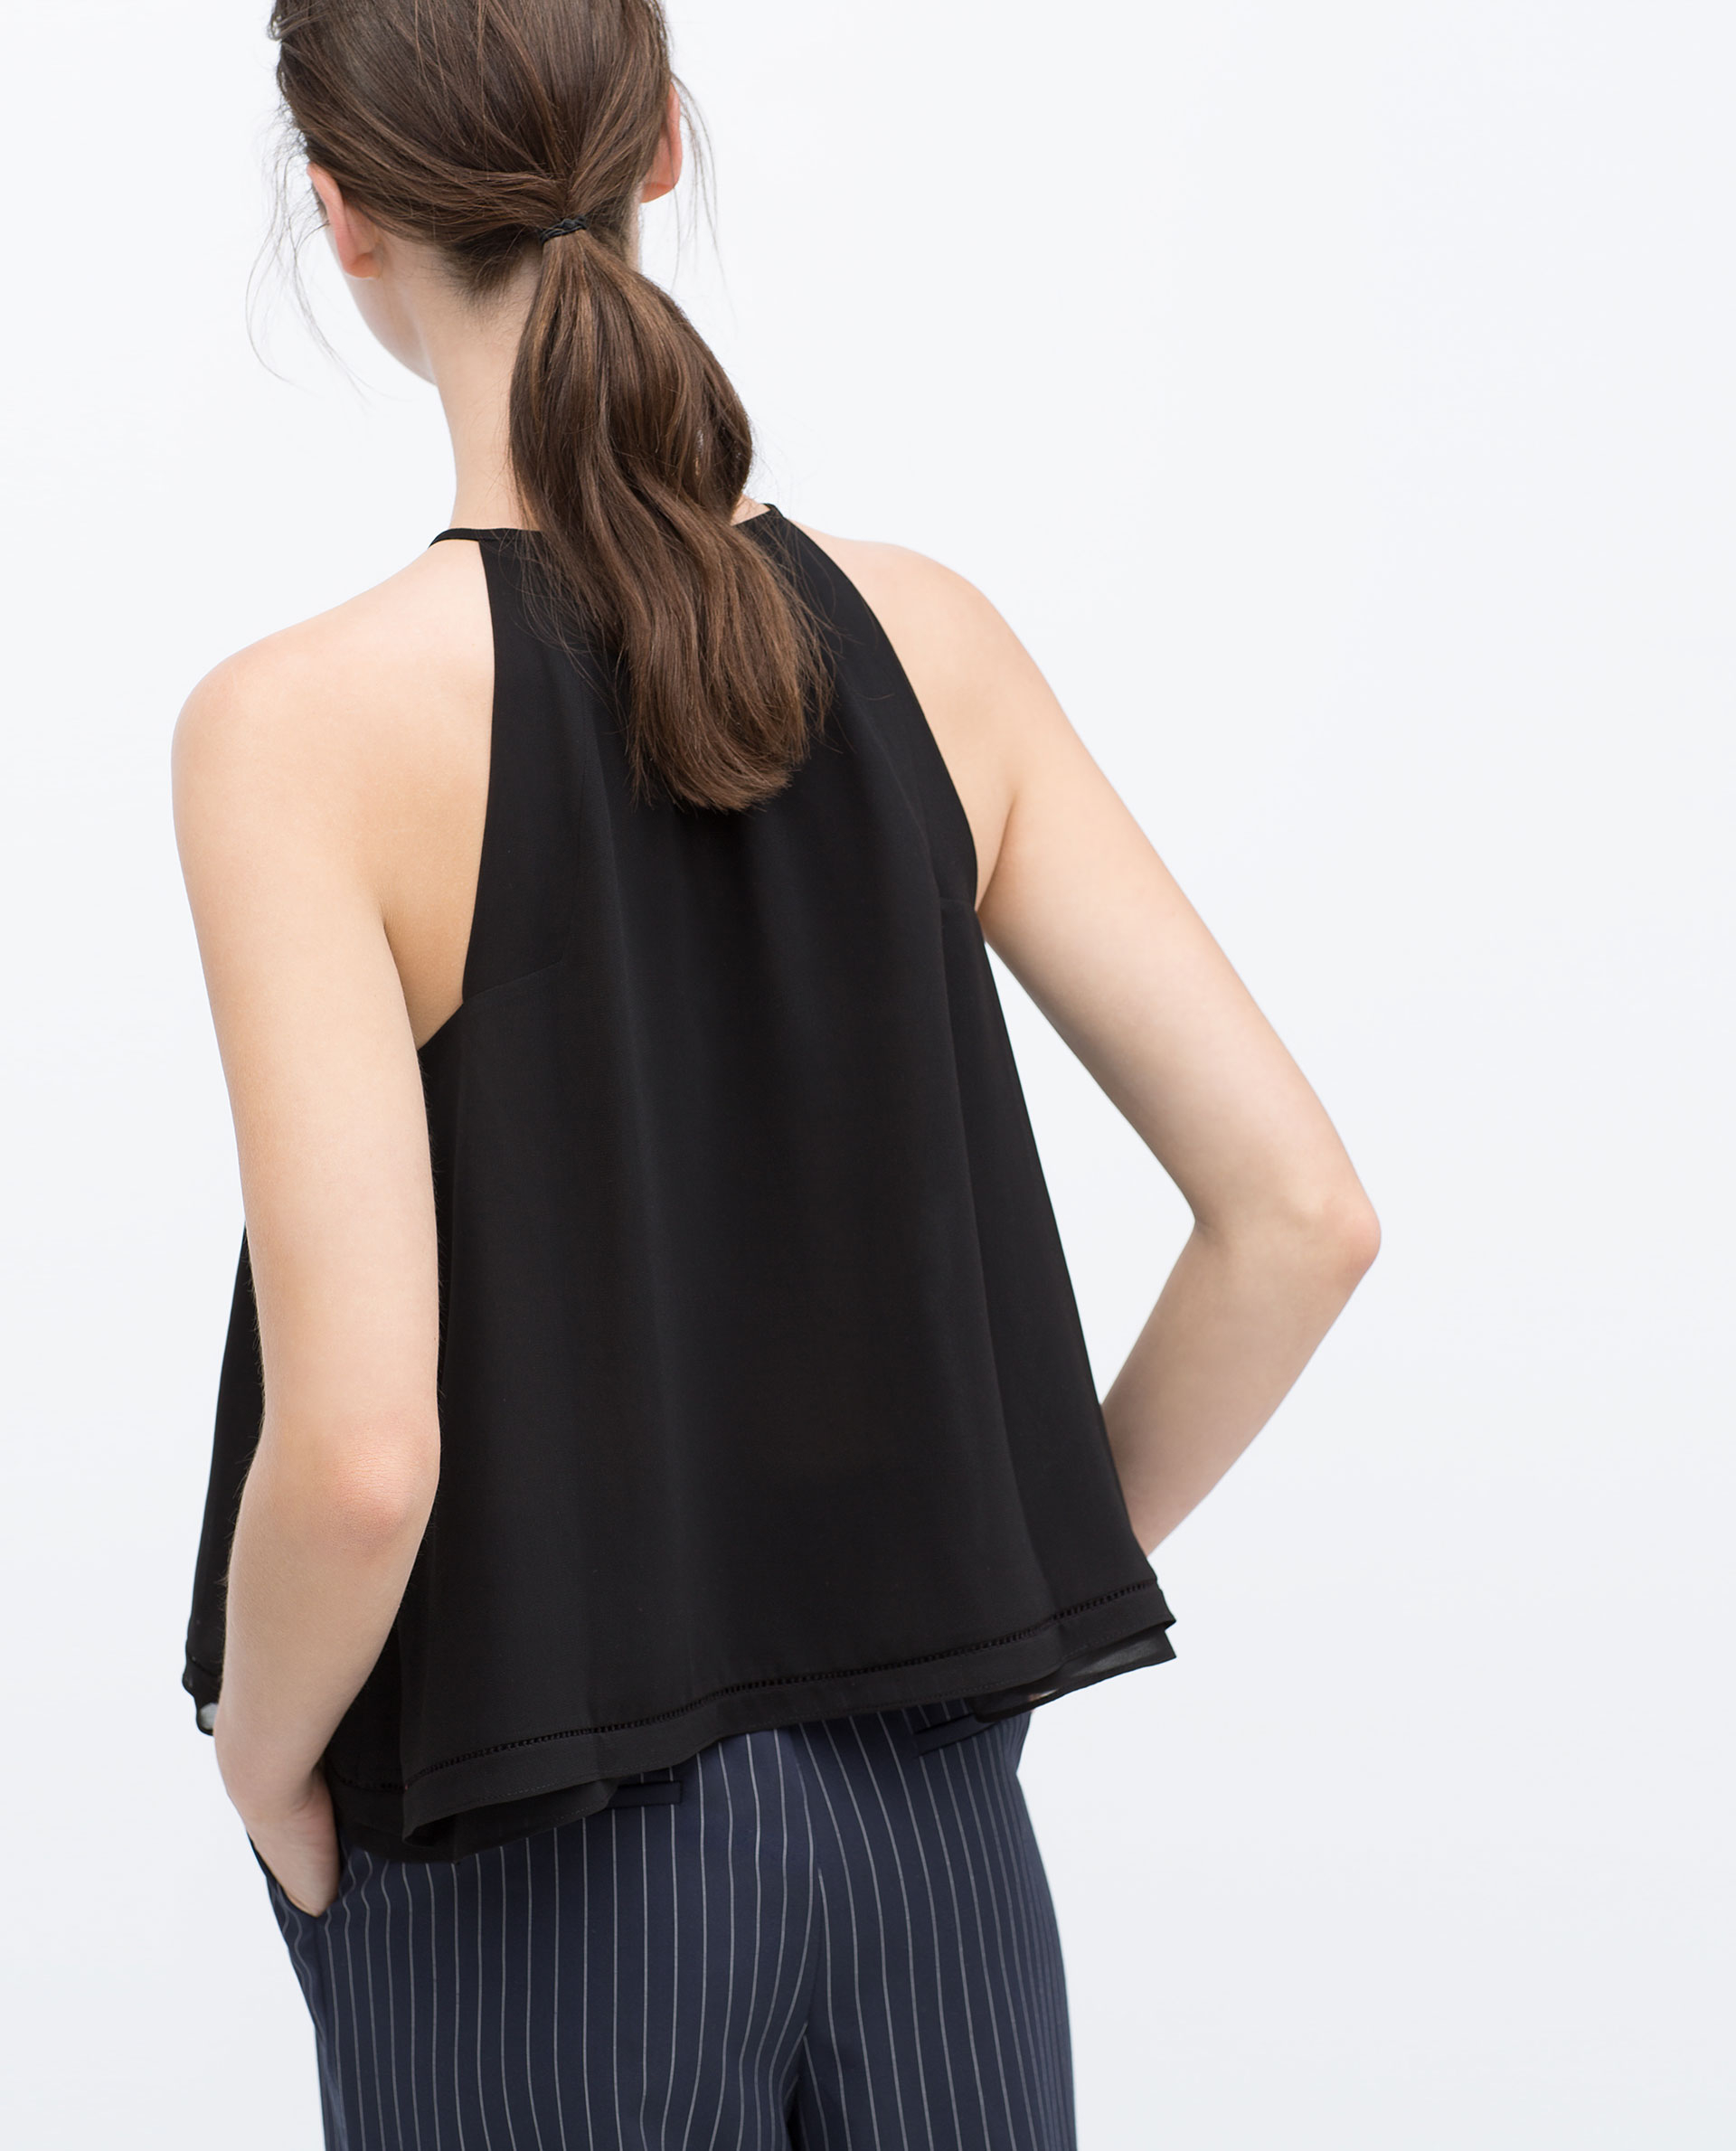 Zara Halter Neck Top in Black | Lyst